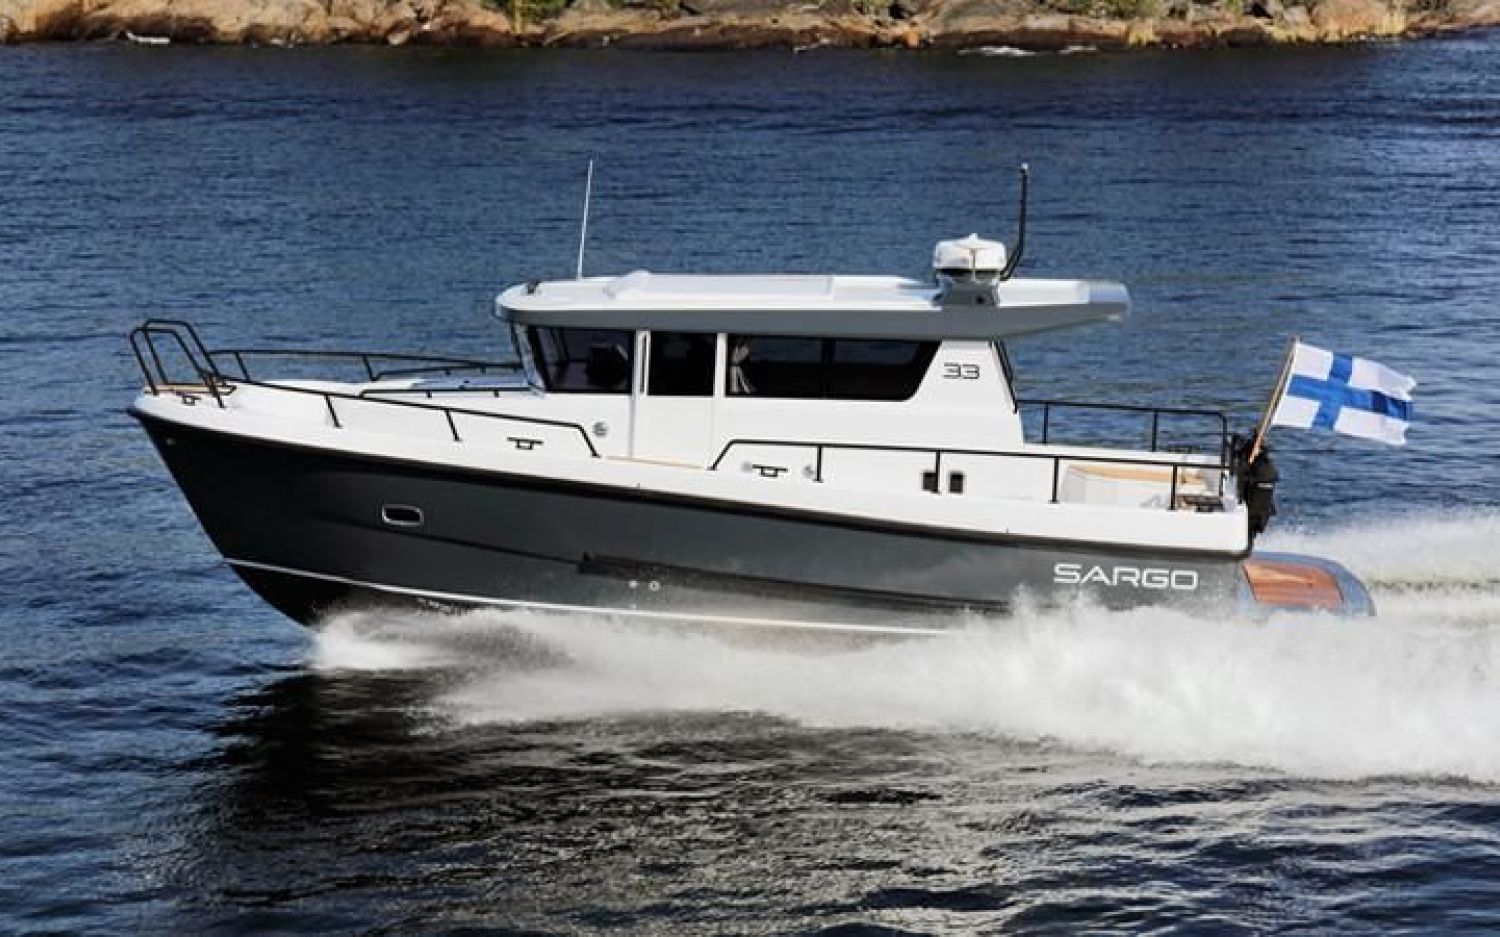 Sargo 33 Explorer, Motorjacht for sale by HollandBoat International Yachtbrokers